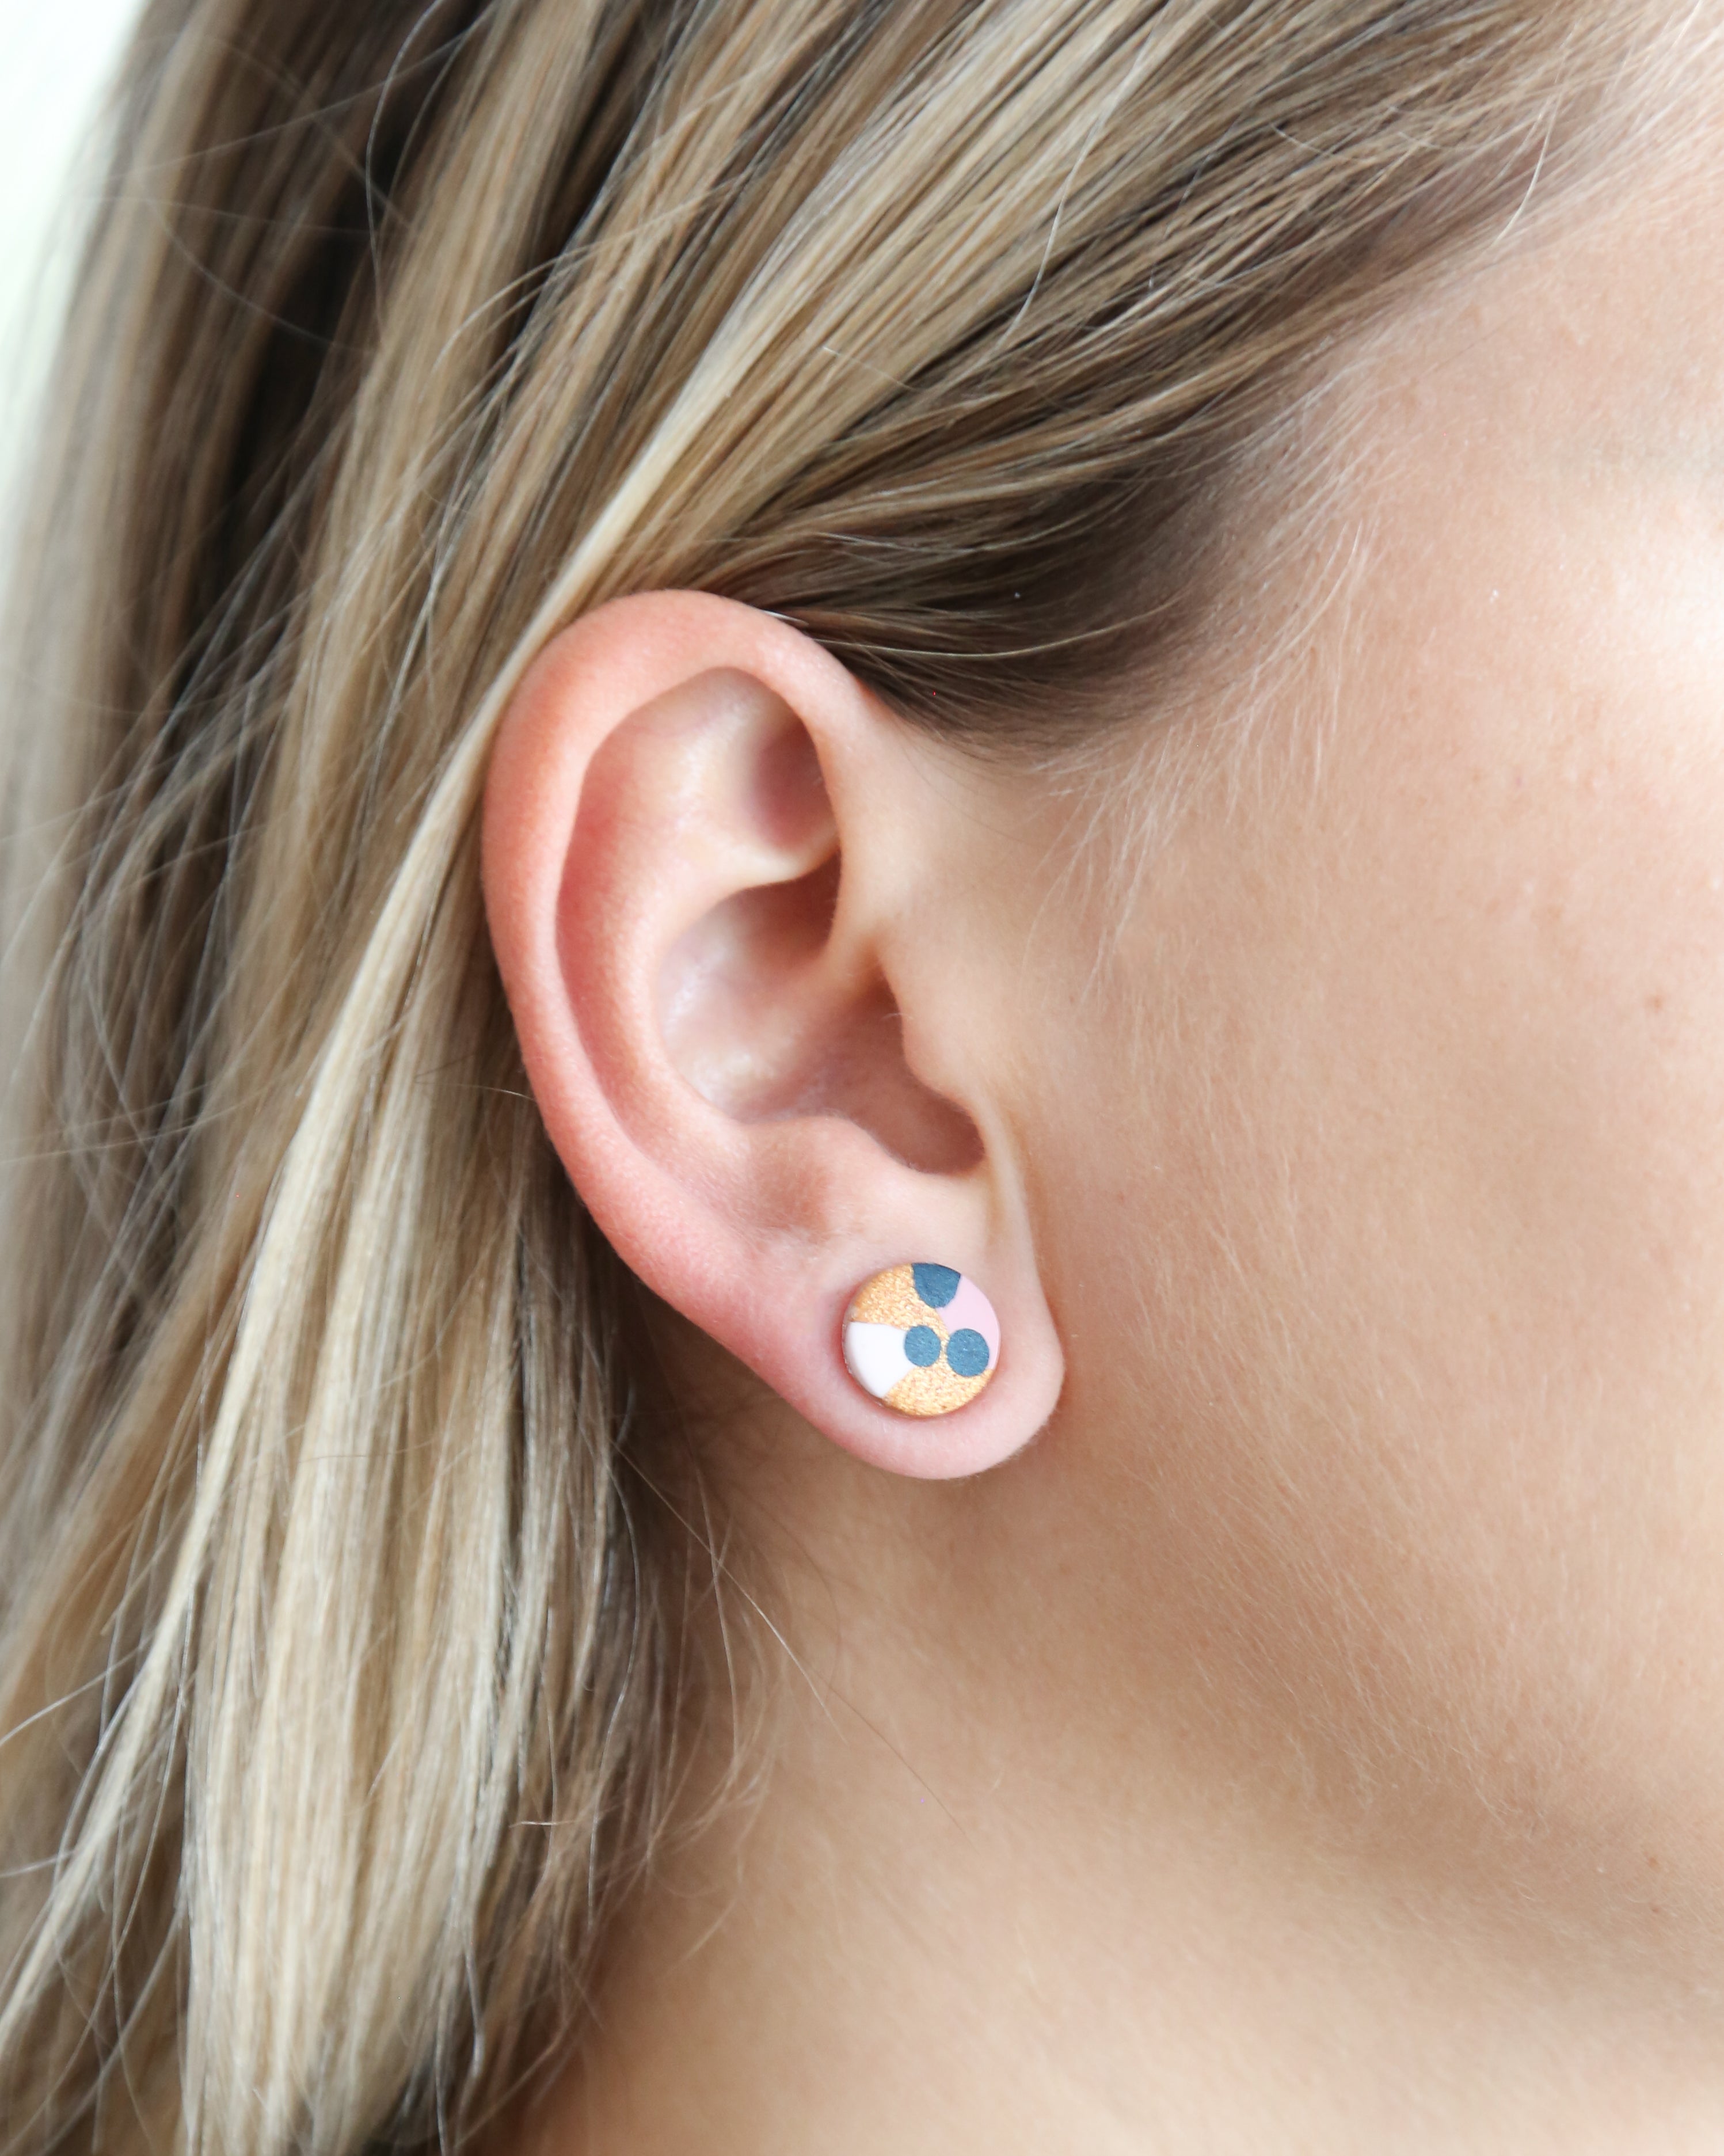 Colorful stud earrings for sensitive ears, Unusual fashion earrings